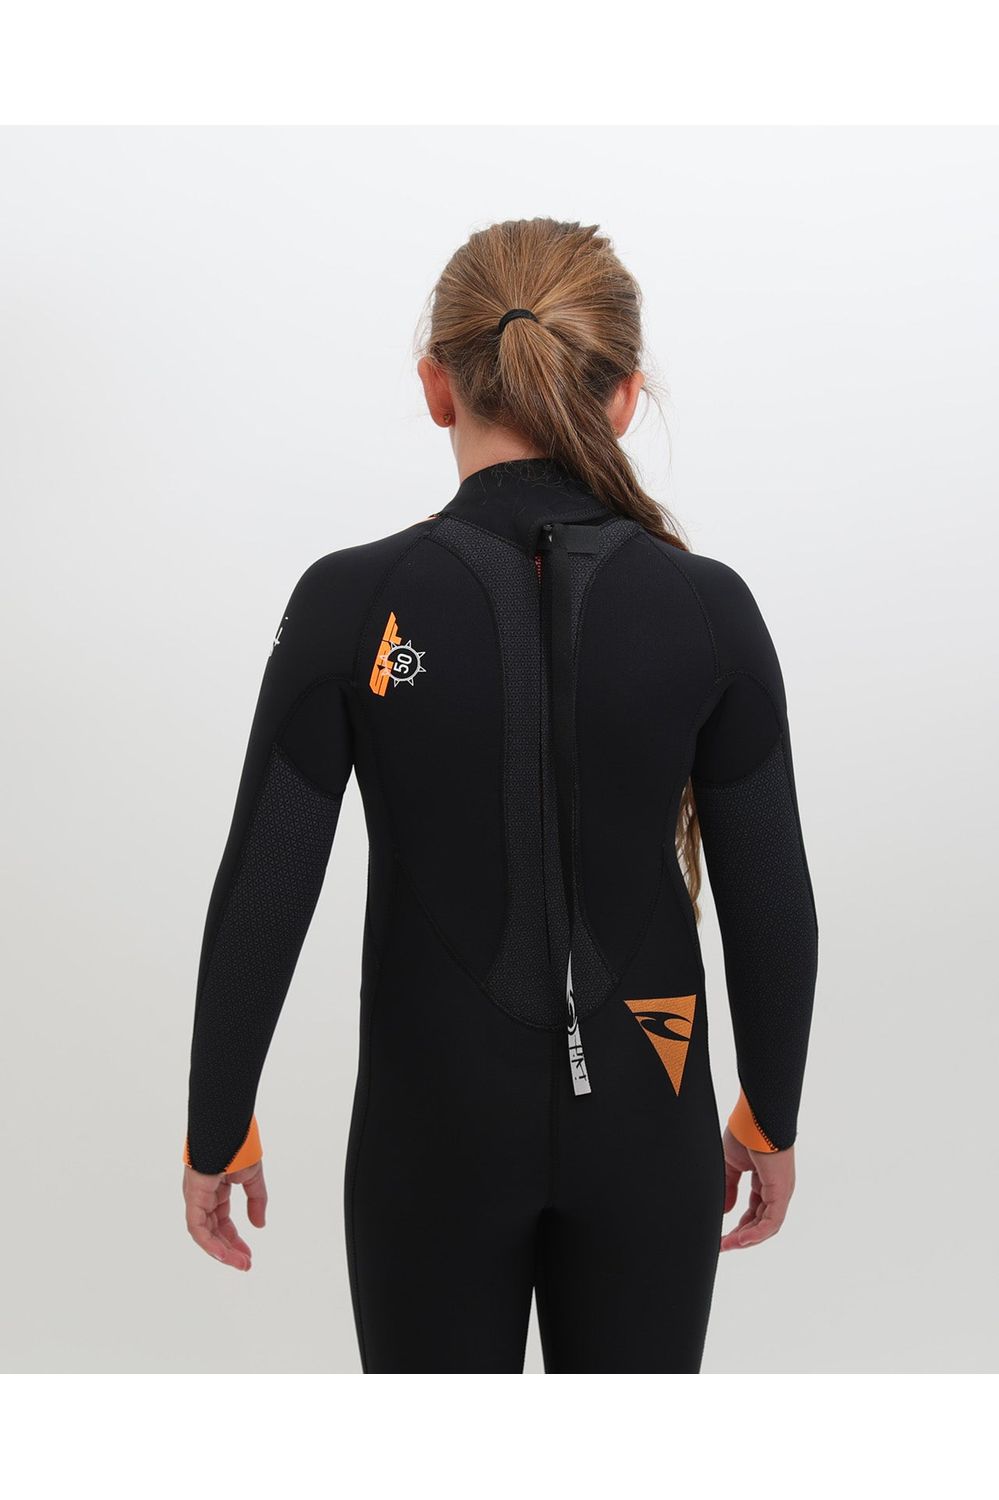 Tiki Junior Tech 4/3 Wetsuit GBS Steamer - Back Zip - Black/Orange